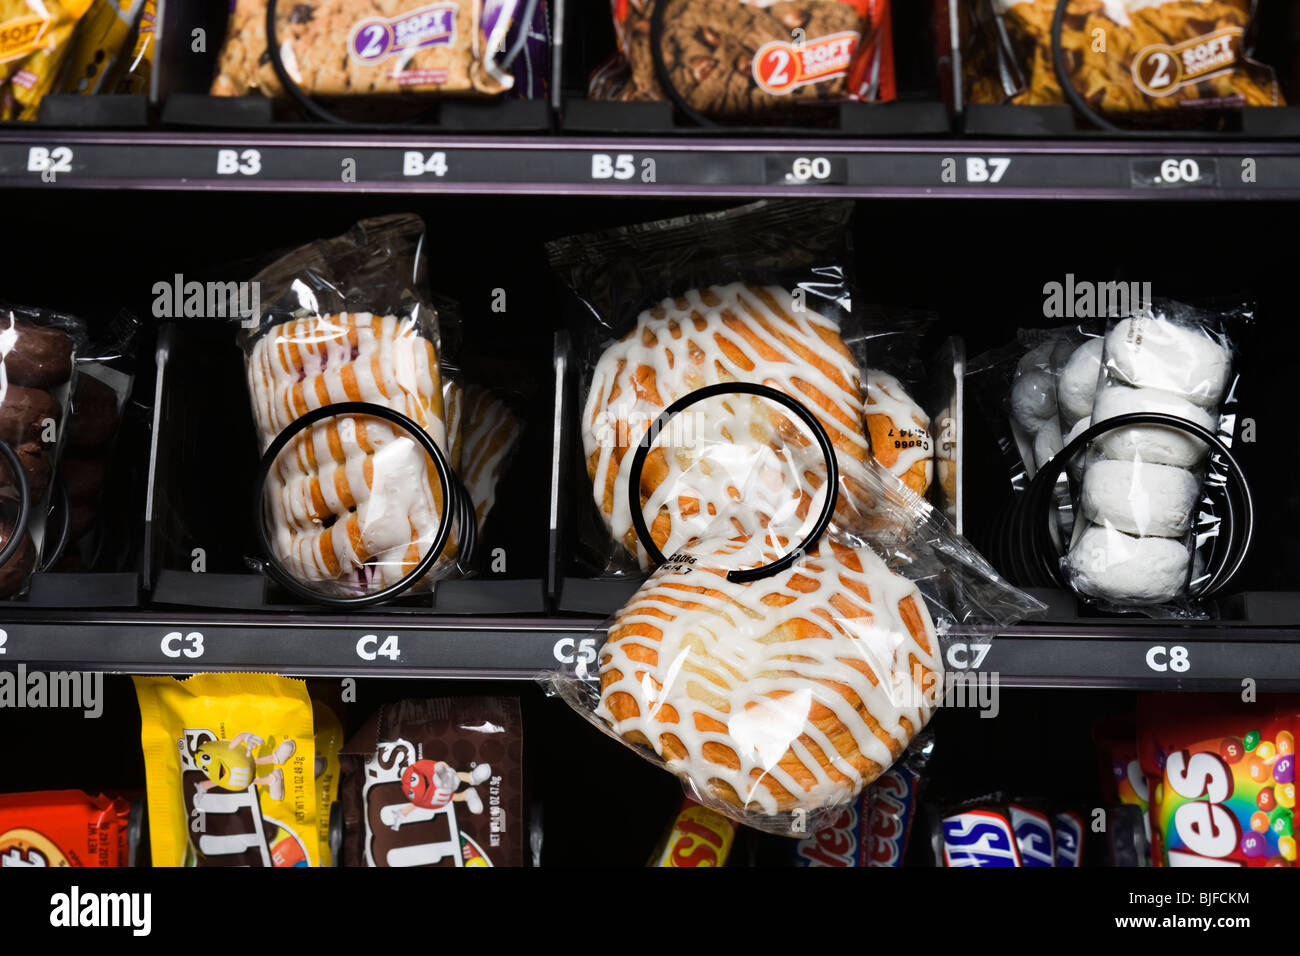 danish hanging in a vending machine Stock Photo